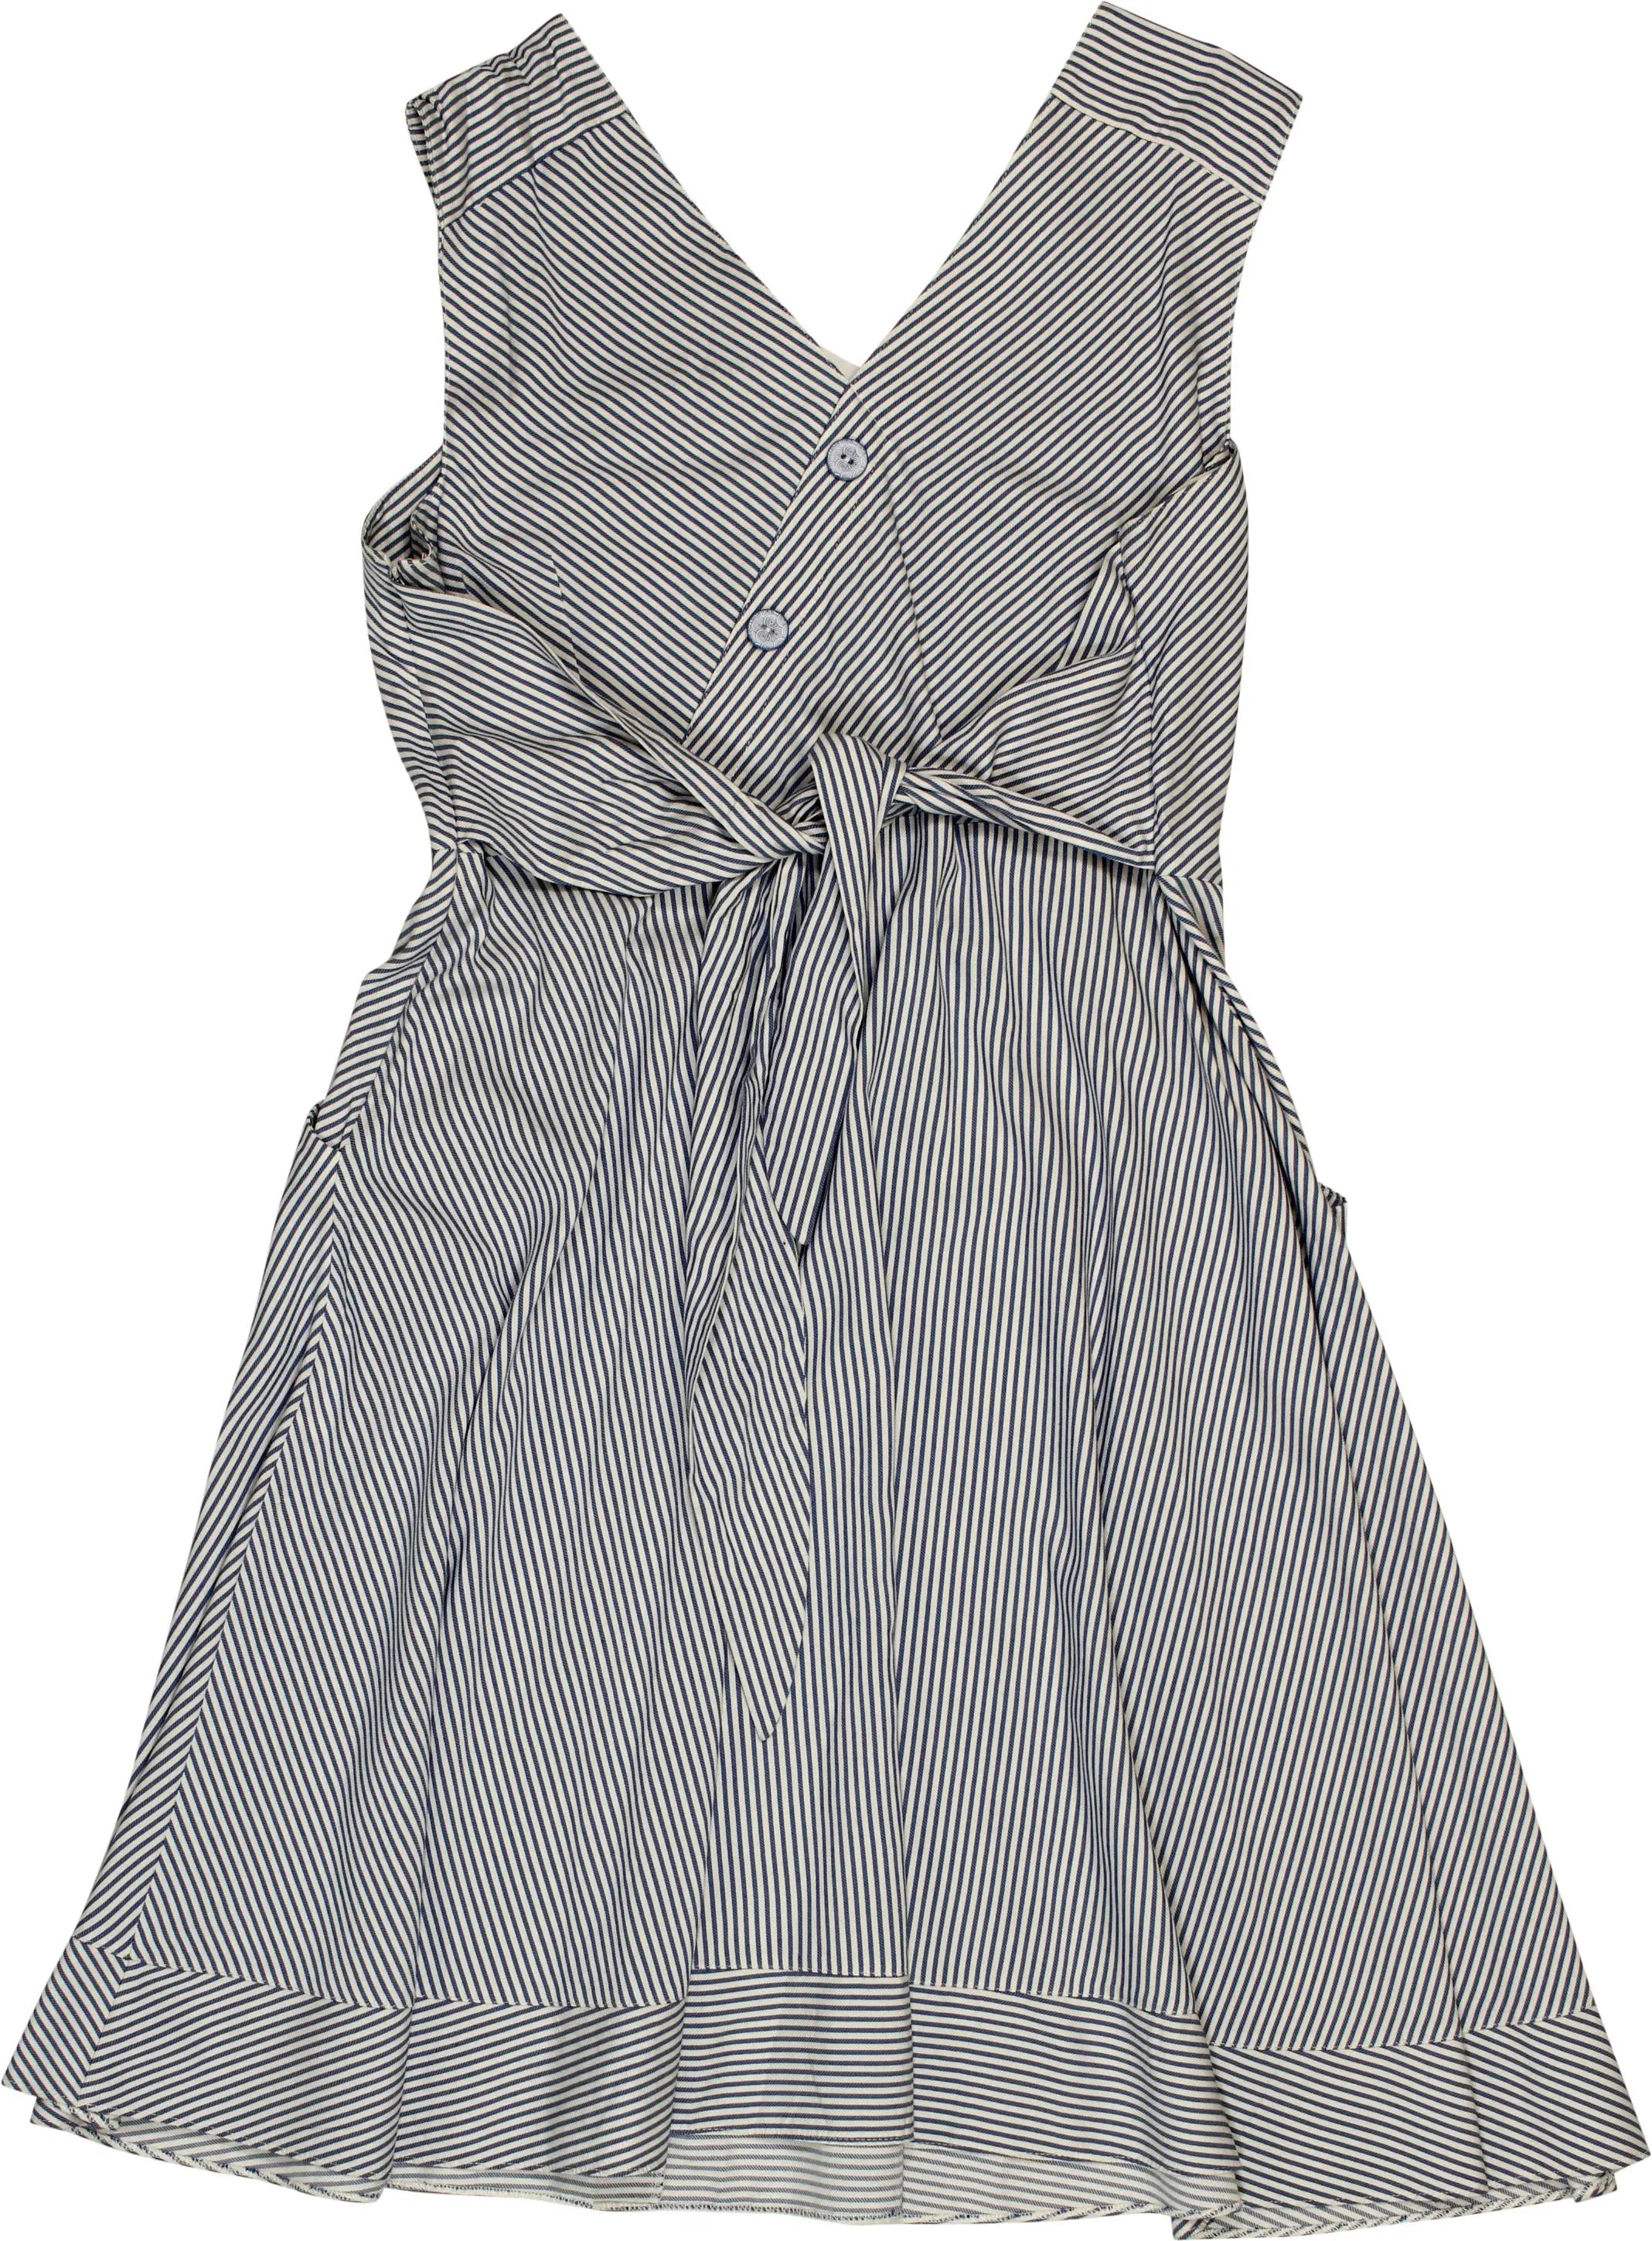 Un Jour Ailleurs - Striped Dress- ThriftTale.com - Vintage and second handclothing